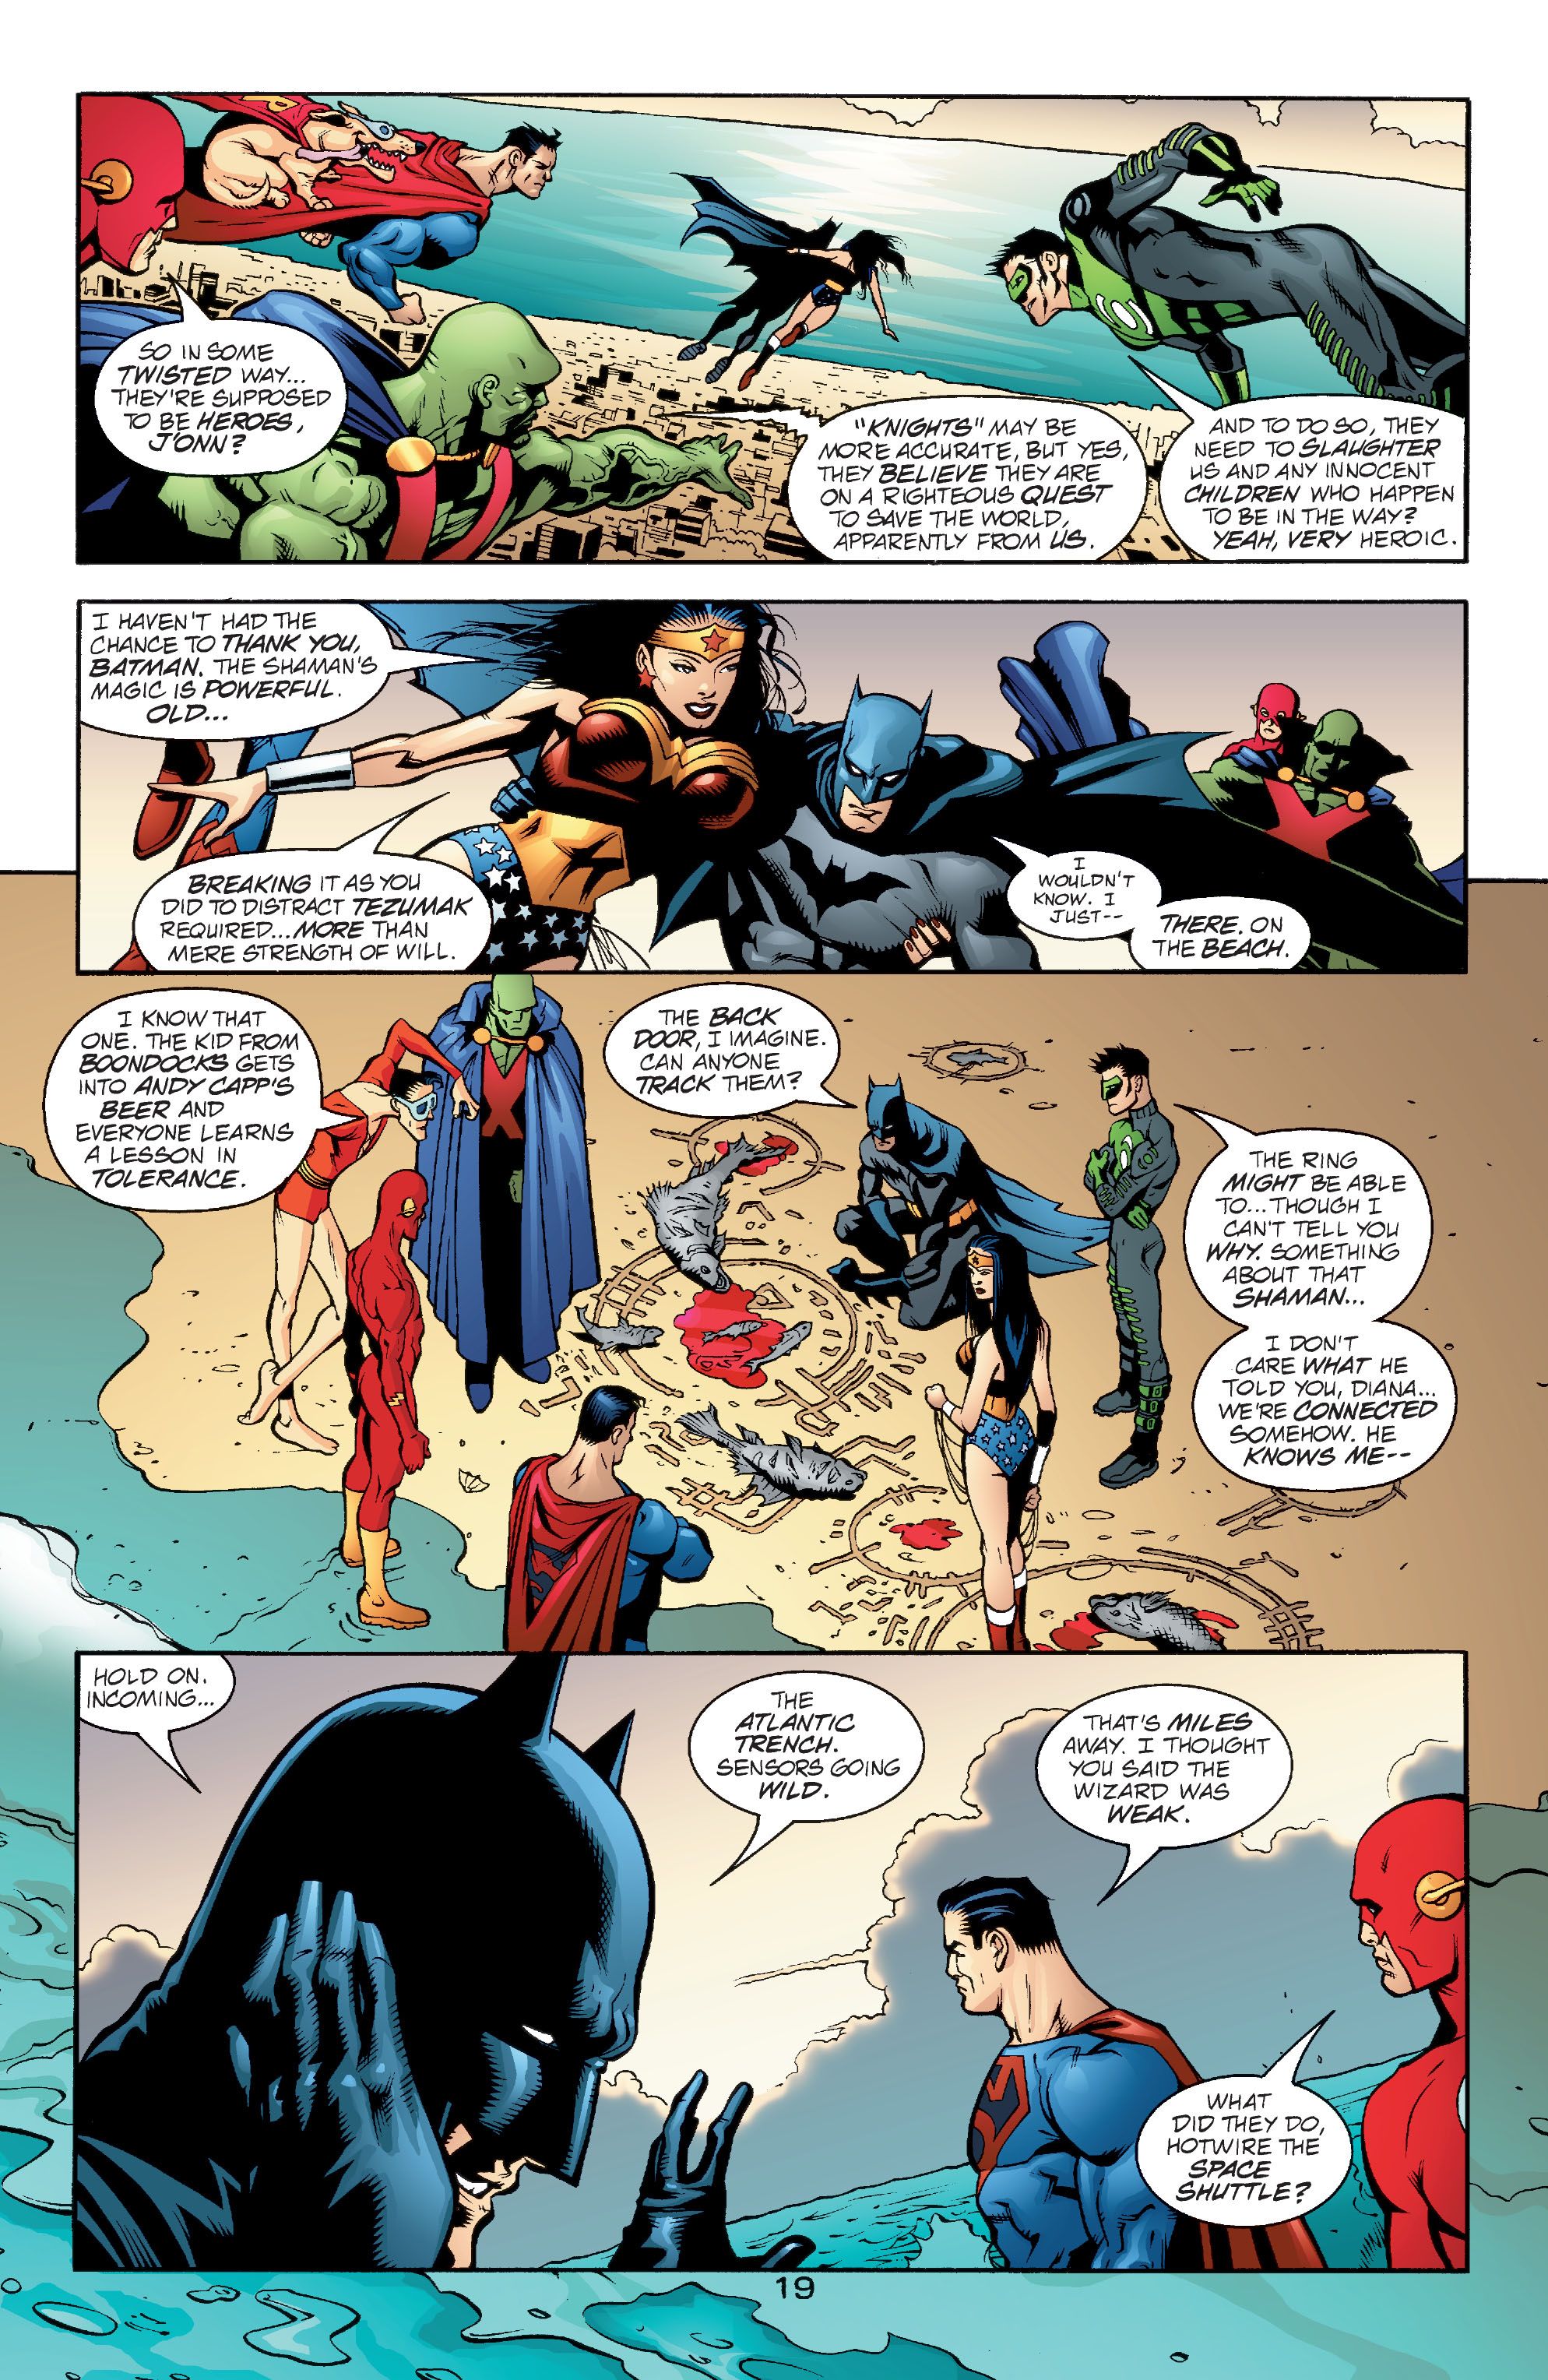 Wonder Woman komplementuje Batmana